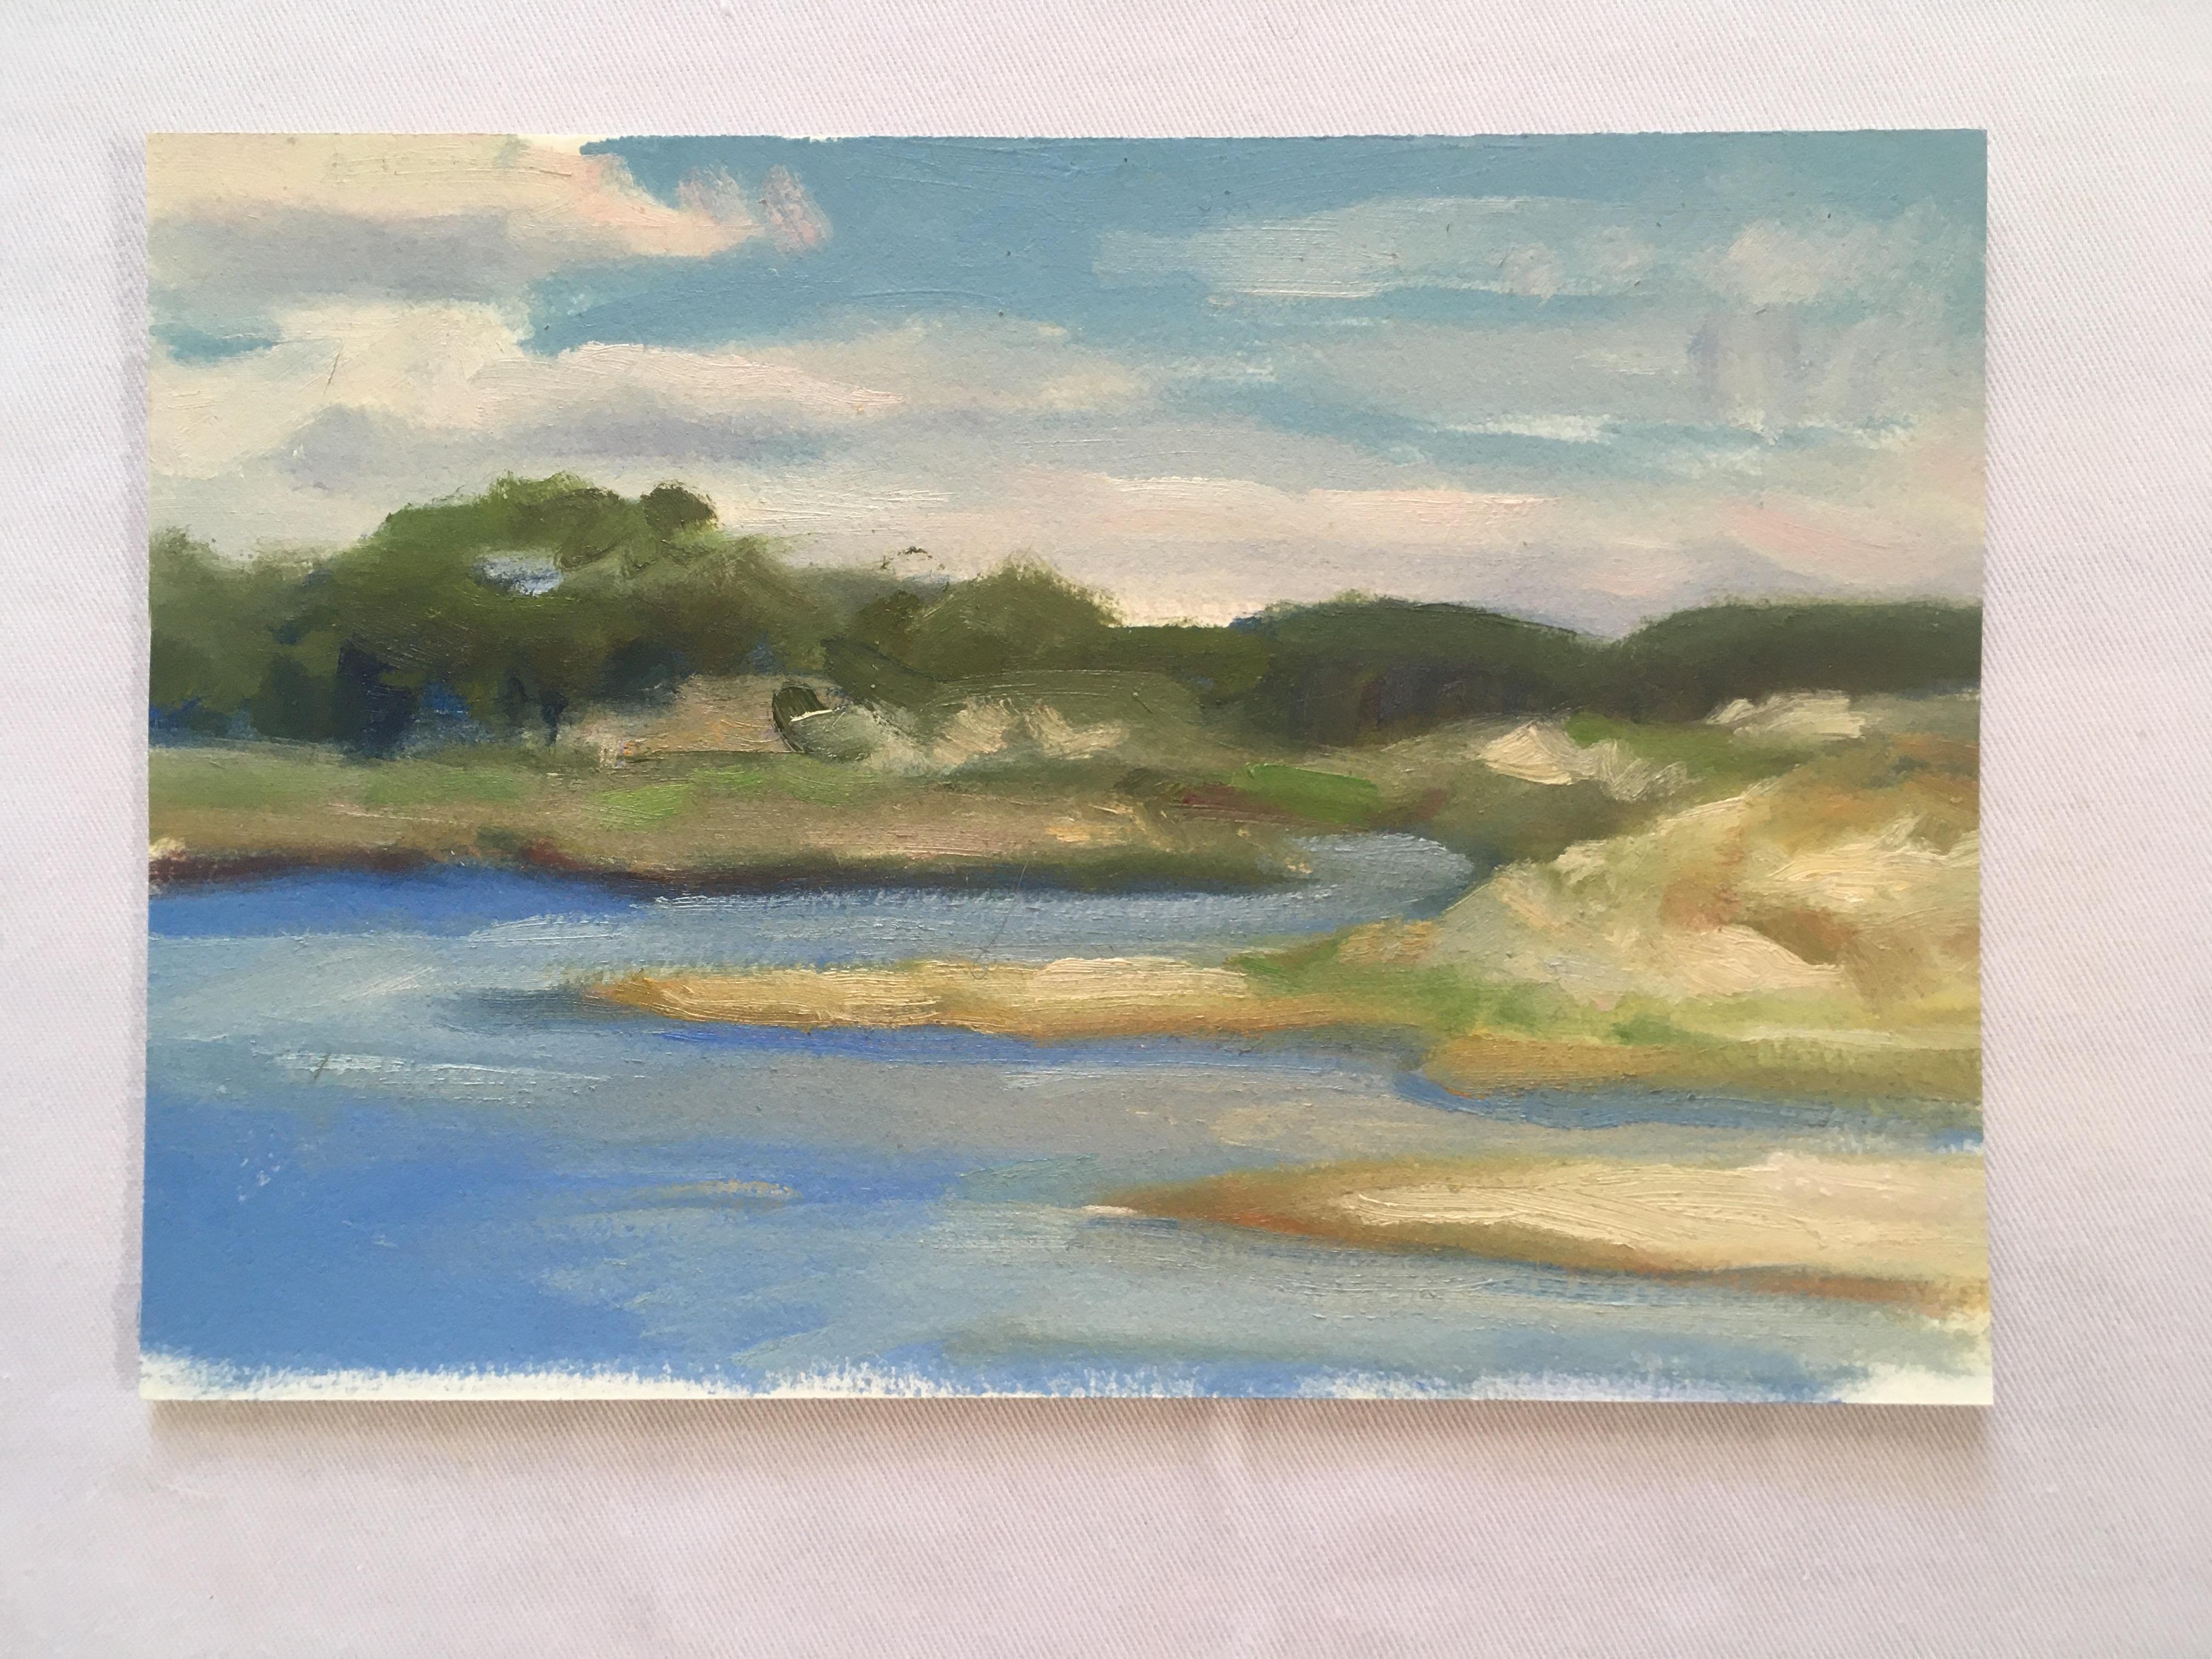 horizon line in landscape painting